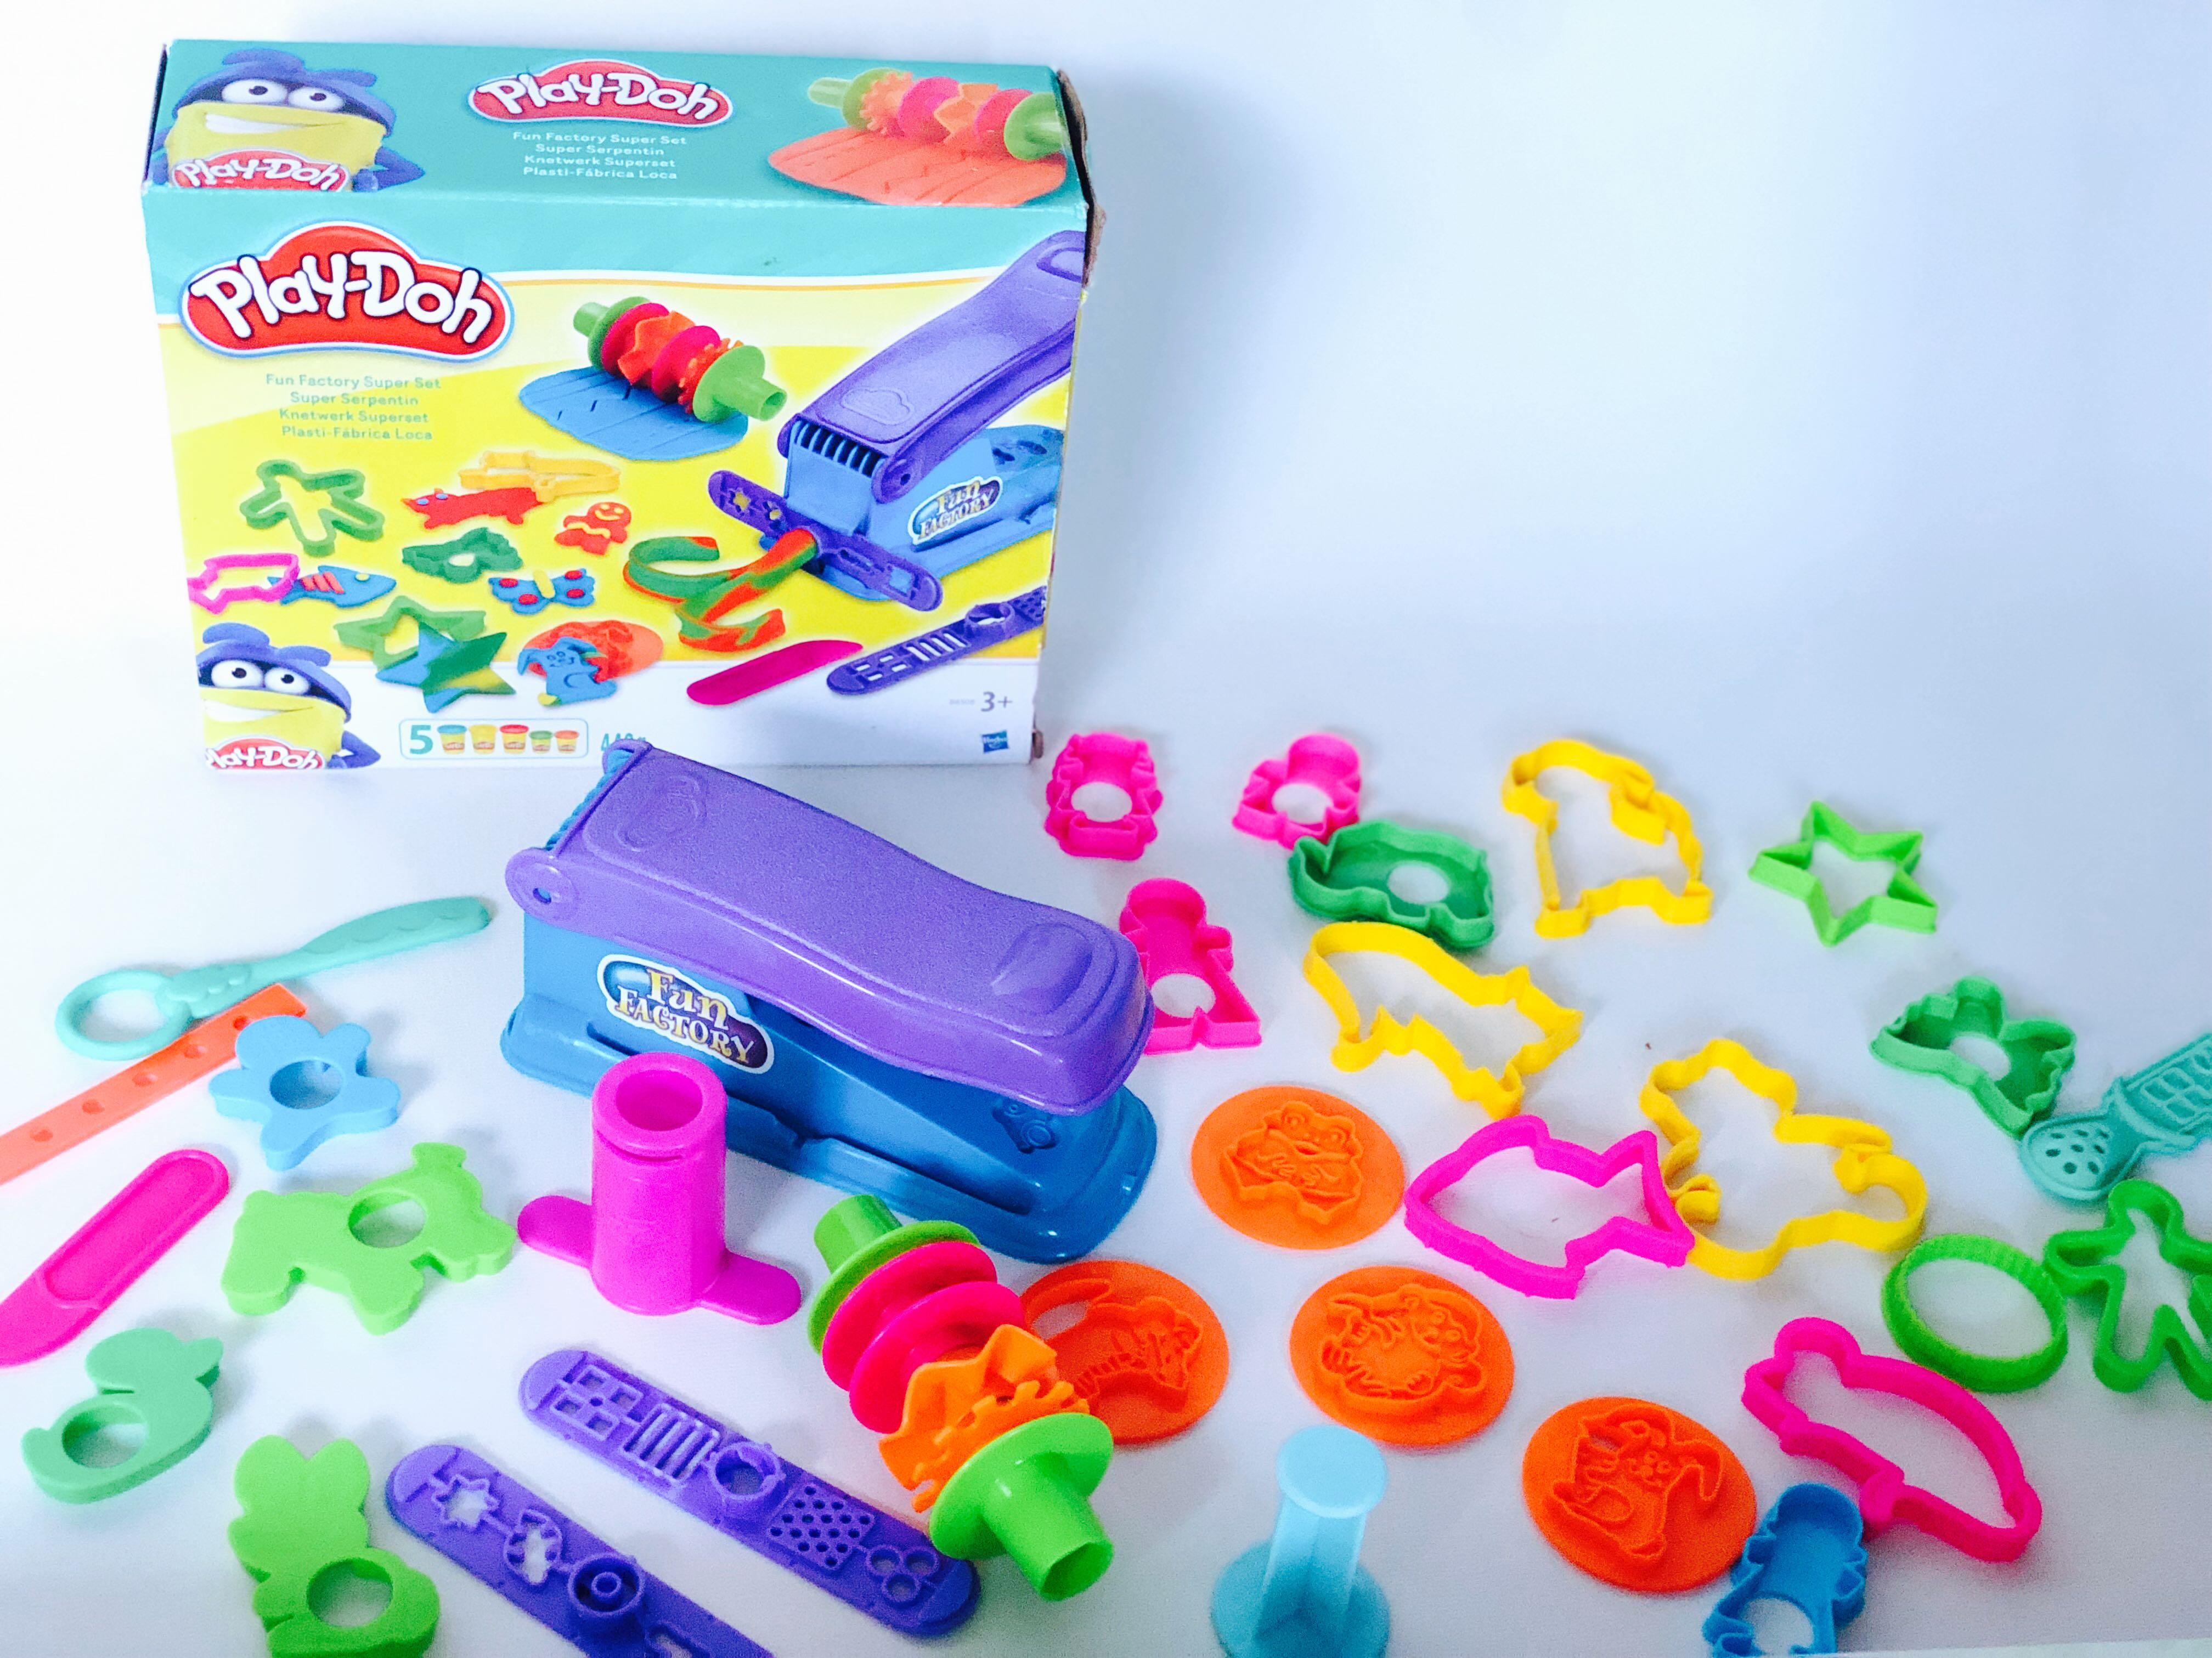 Play-Doh Fun Factory Set - Play-Doh